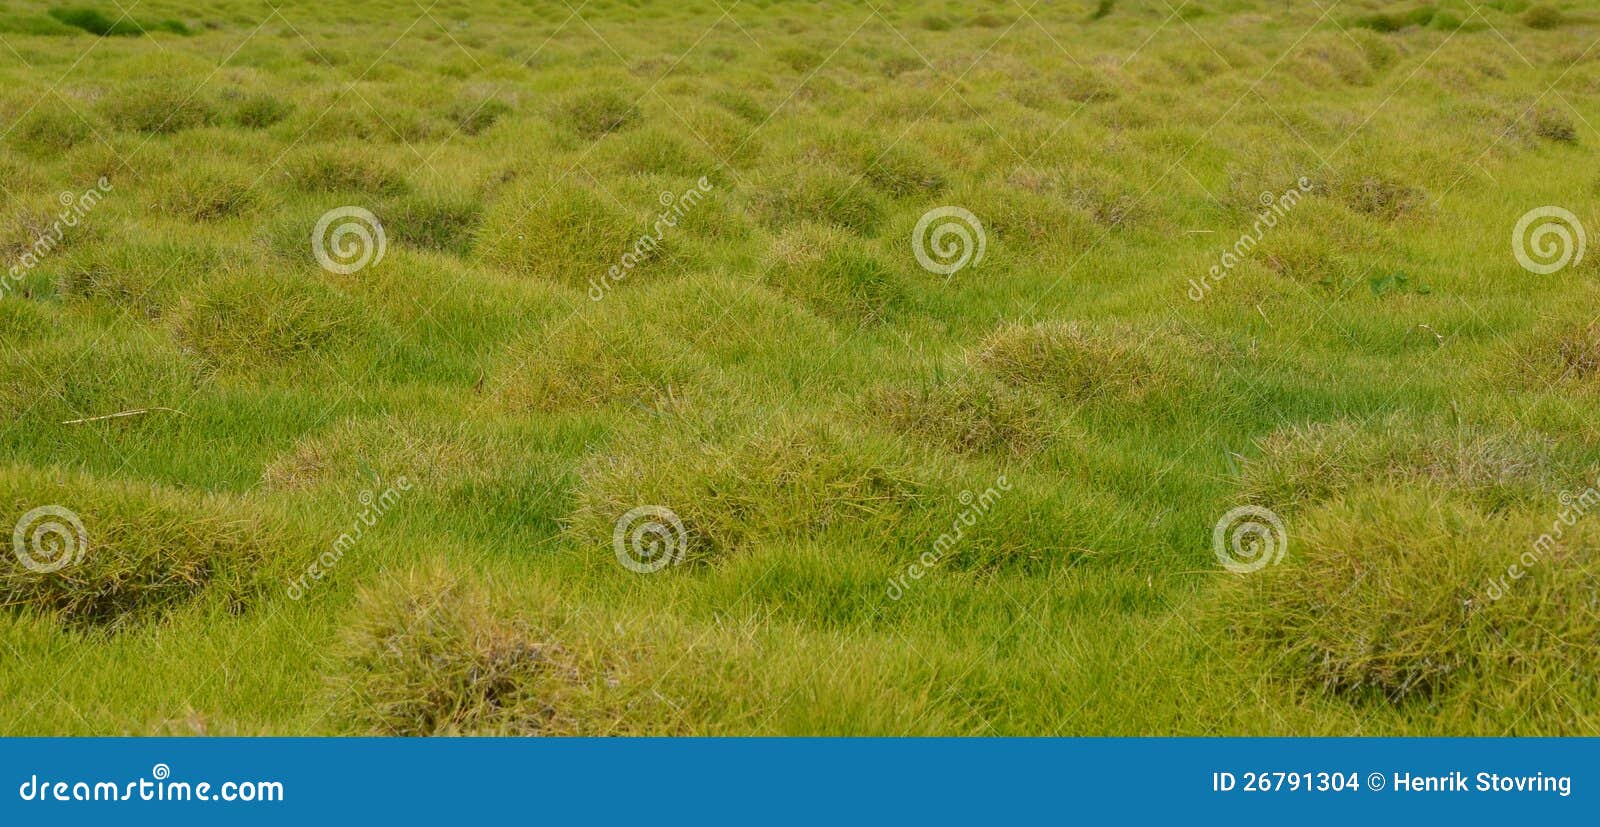 grass tubers